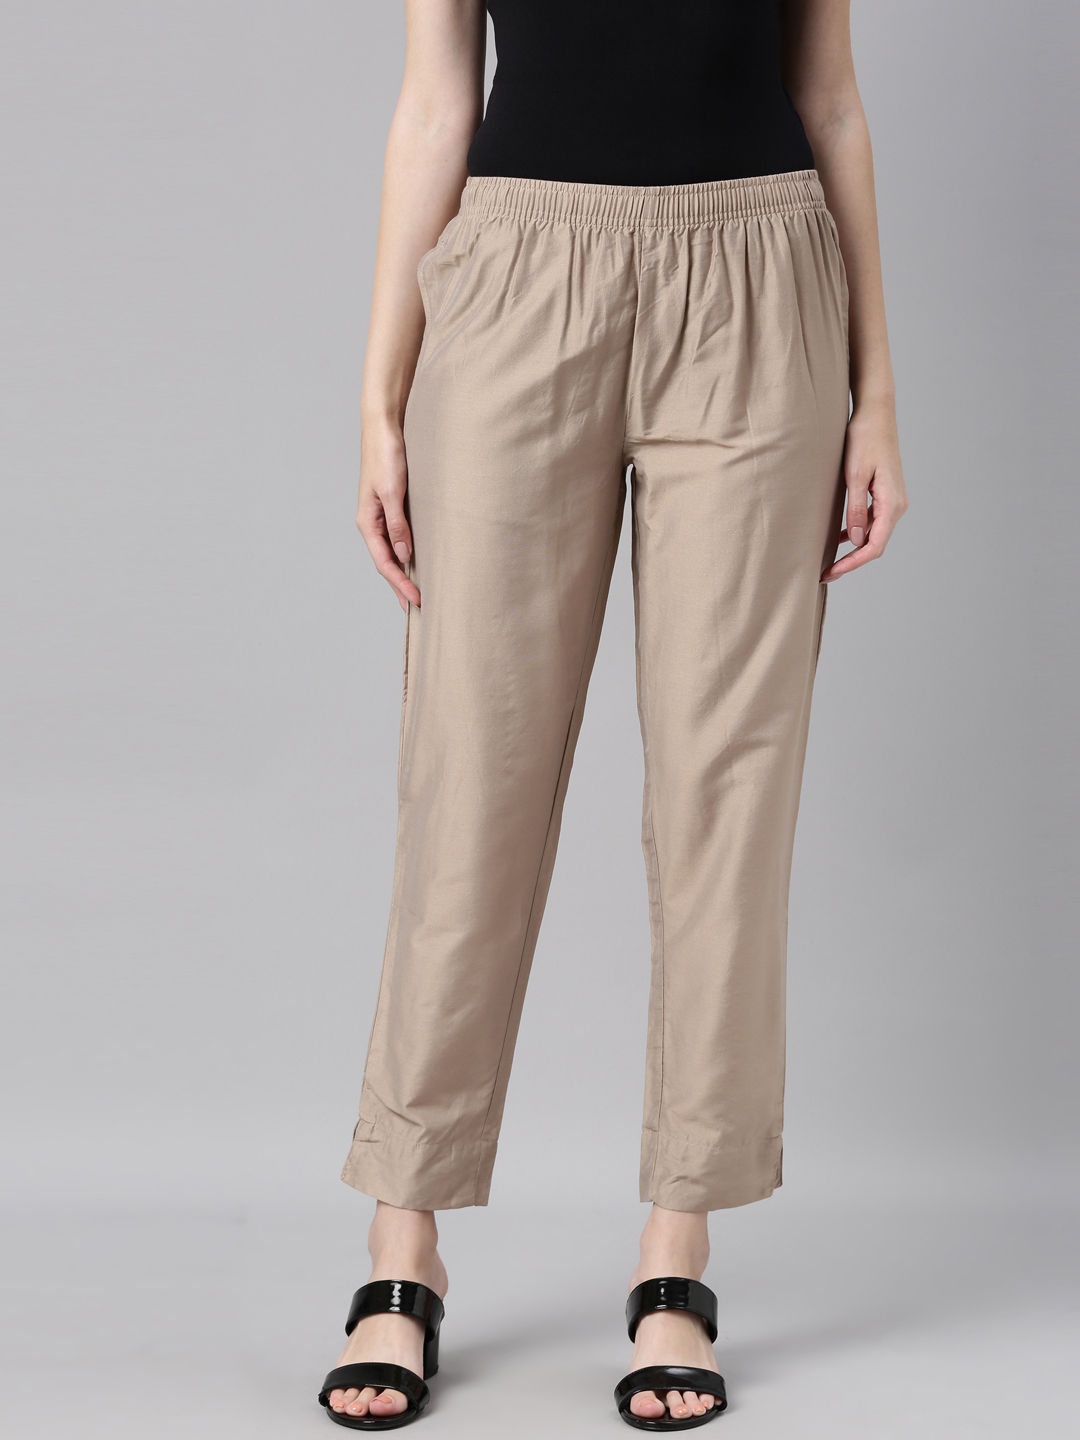 Go Colors Women Solid Mid Rise Metallic Pants - Beige (L)